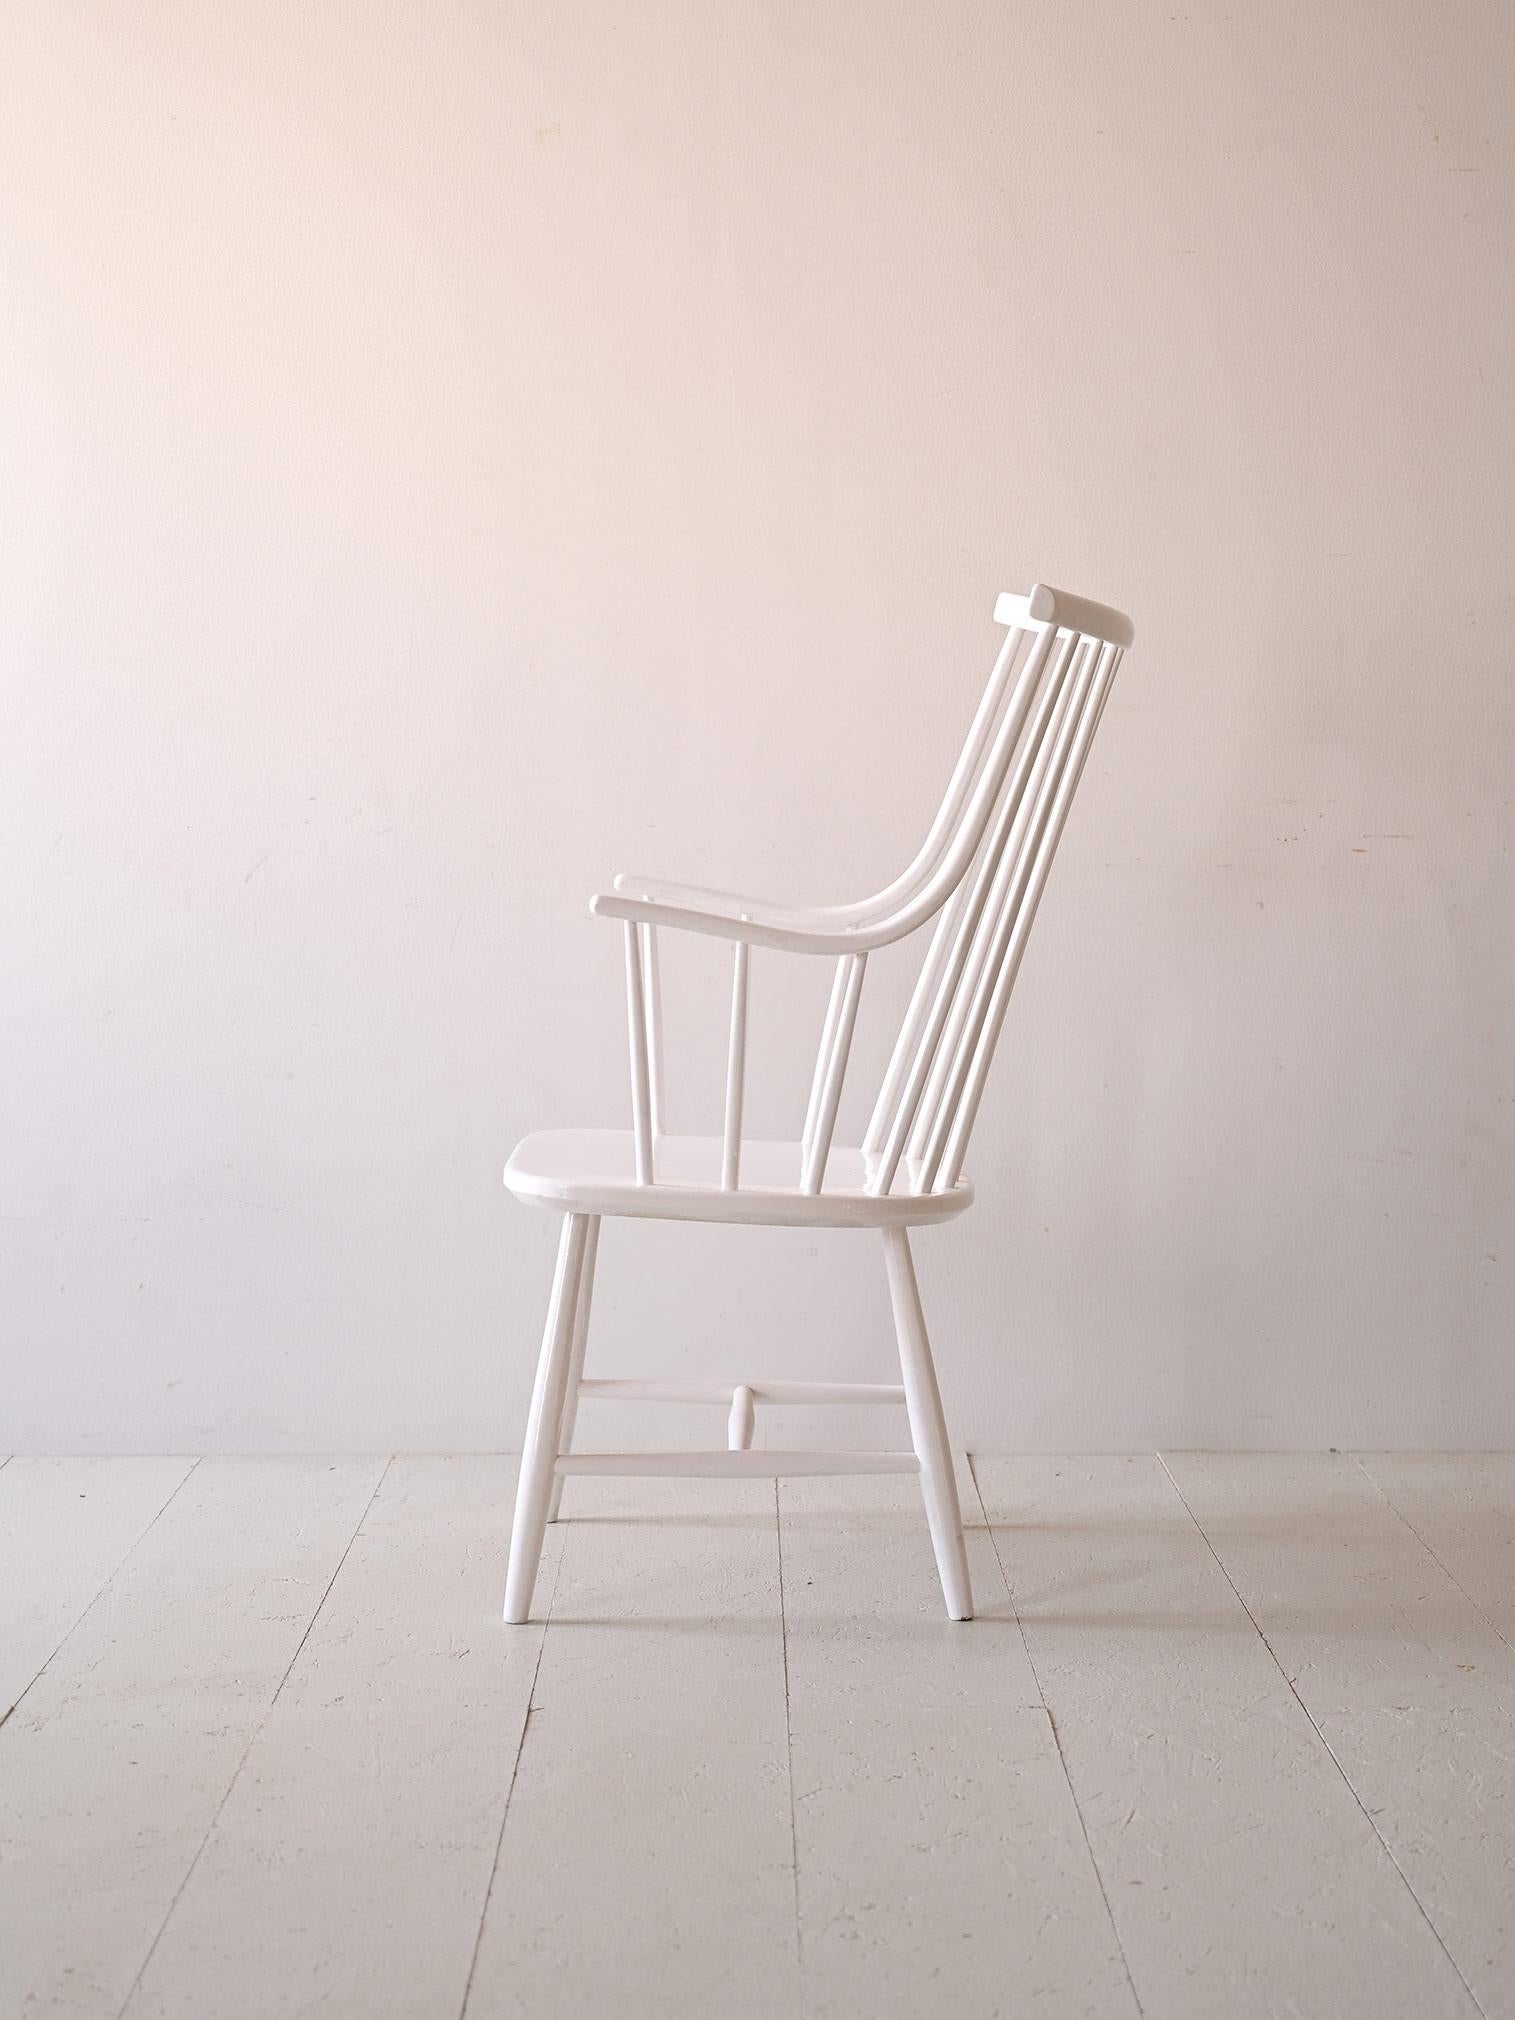 Scandinavian Modern Chair designed by LENA LARSSON model 